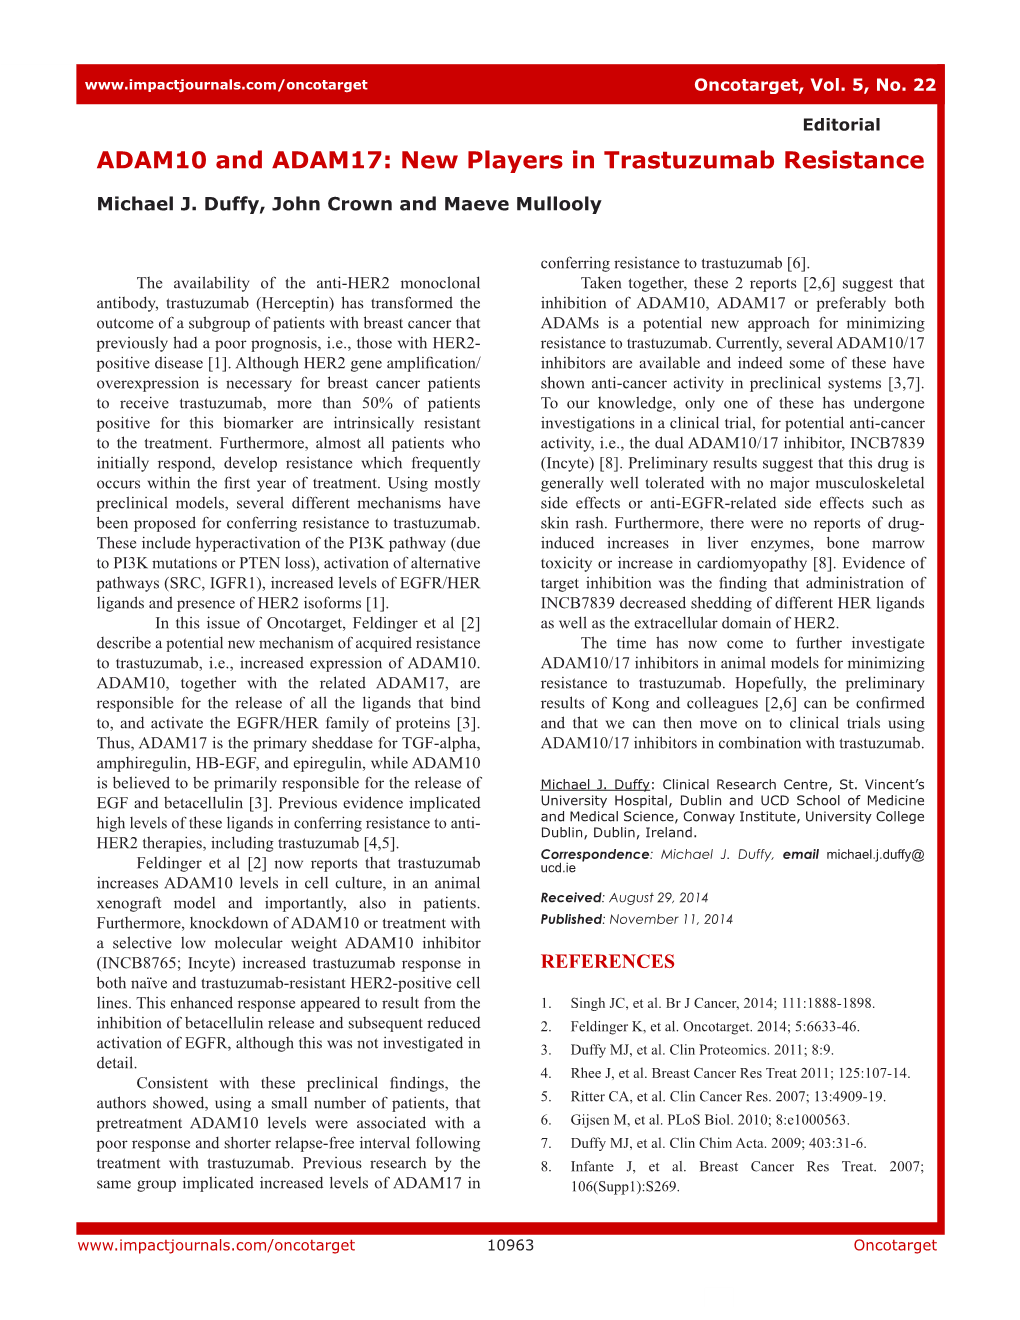 ADAM10 and ADAM17: New Players in Trastuzumab Resistance